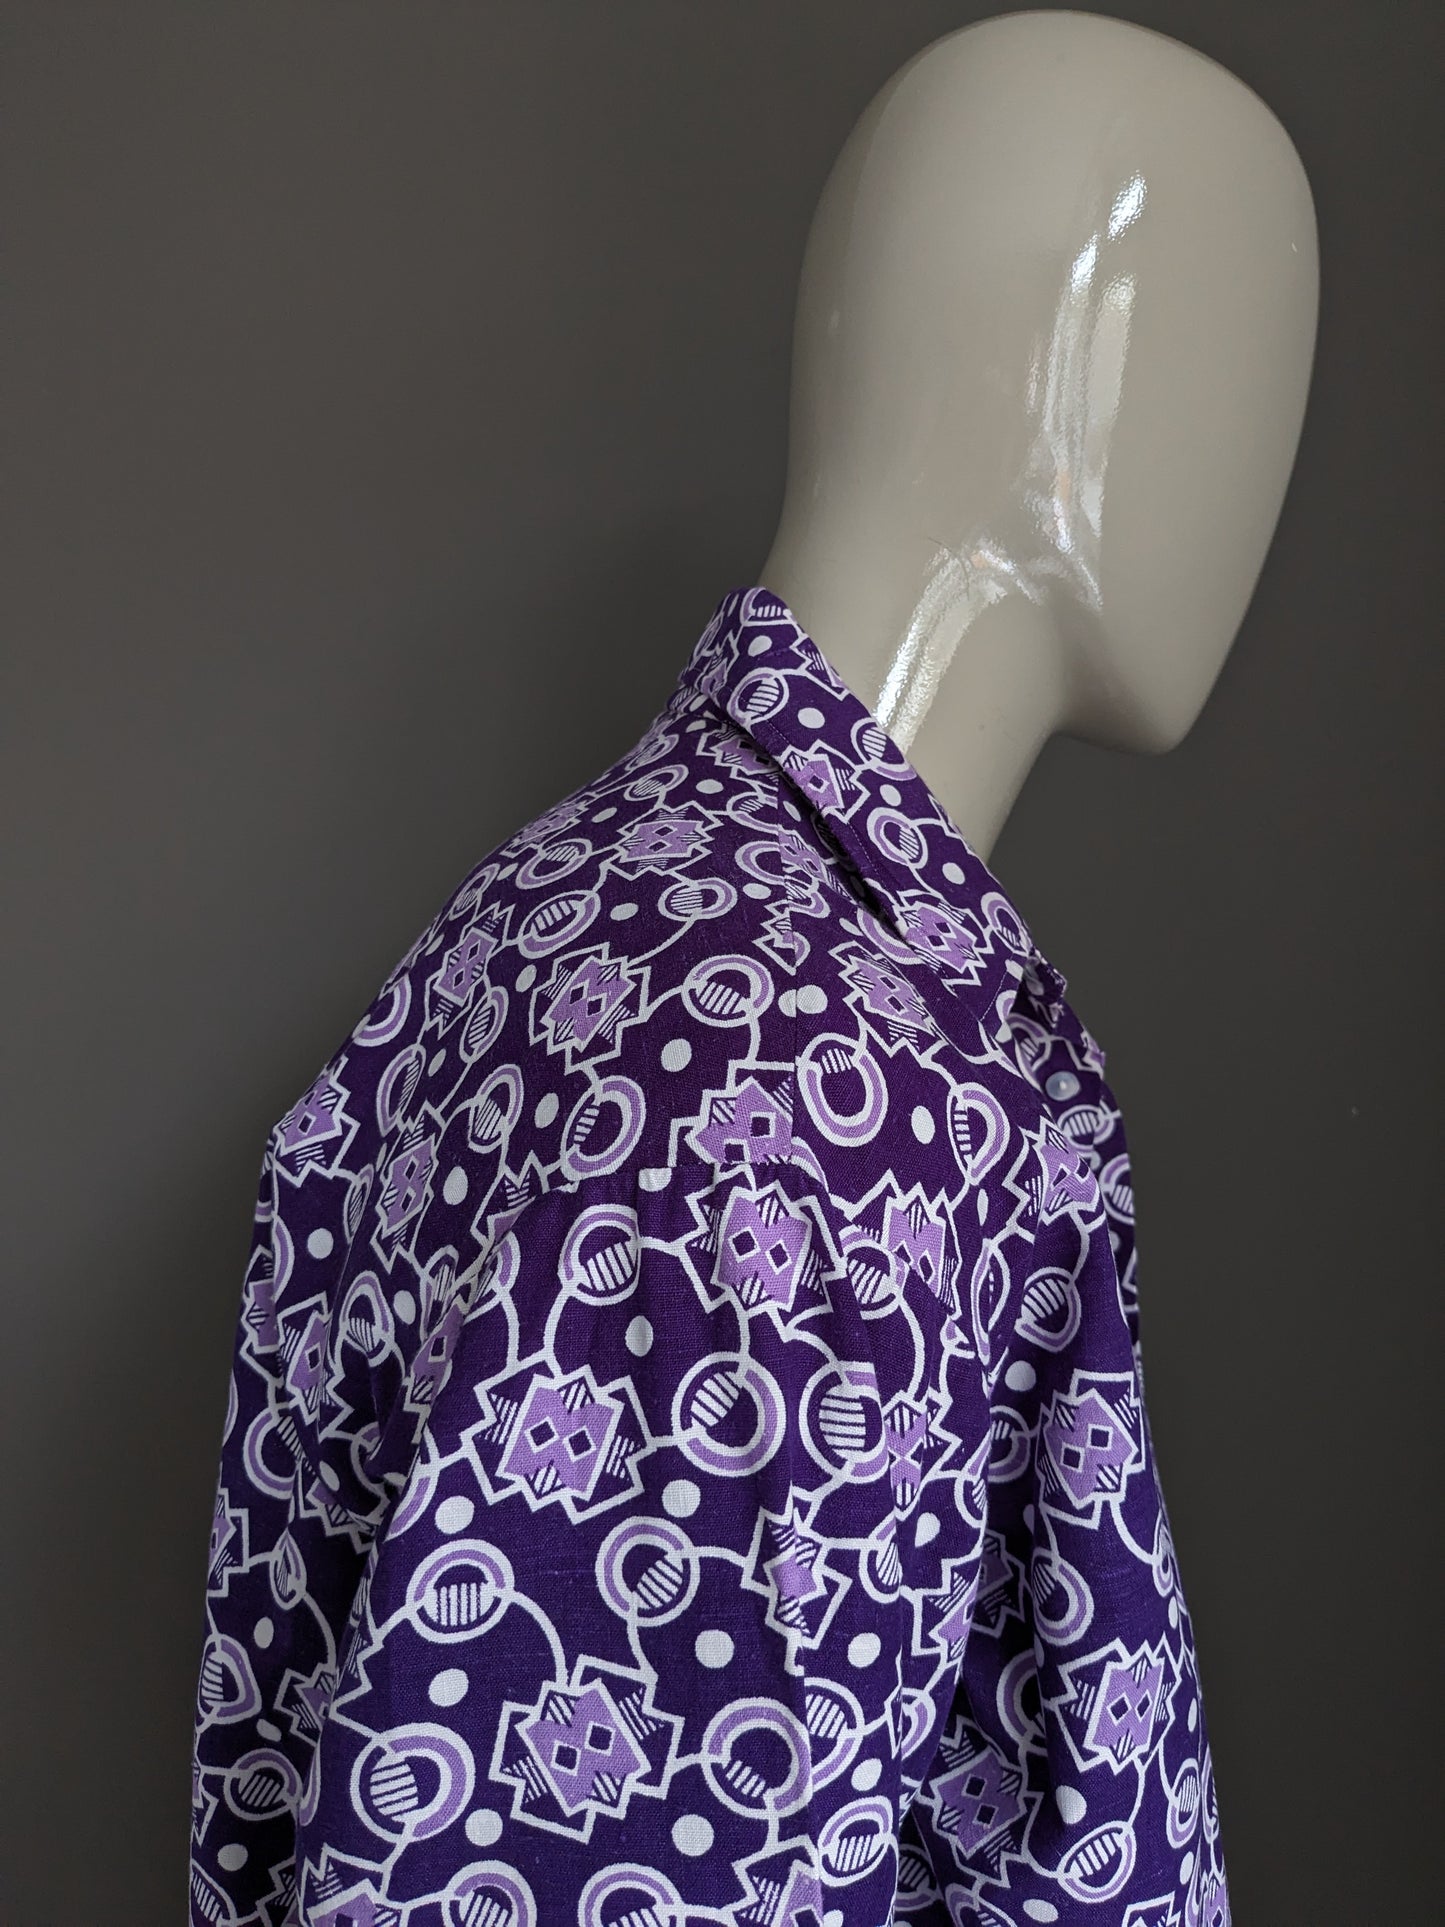 Vintage Lotus shirt. Purple white print. Size 2XL / XXL - 3XL / XXXL.